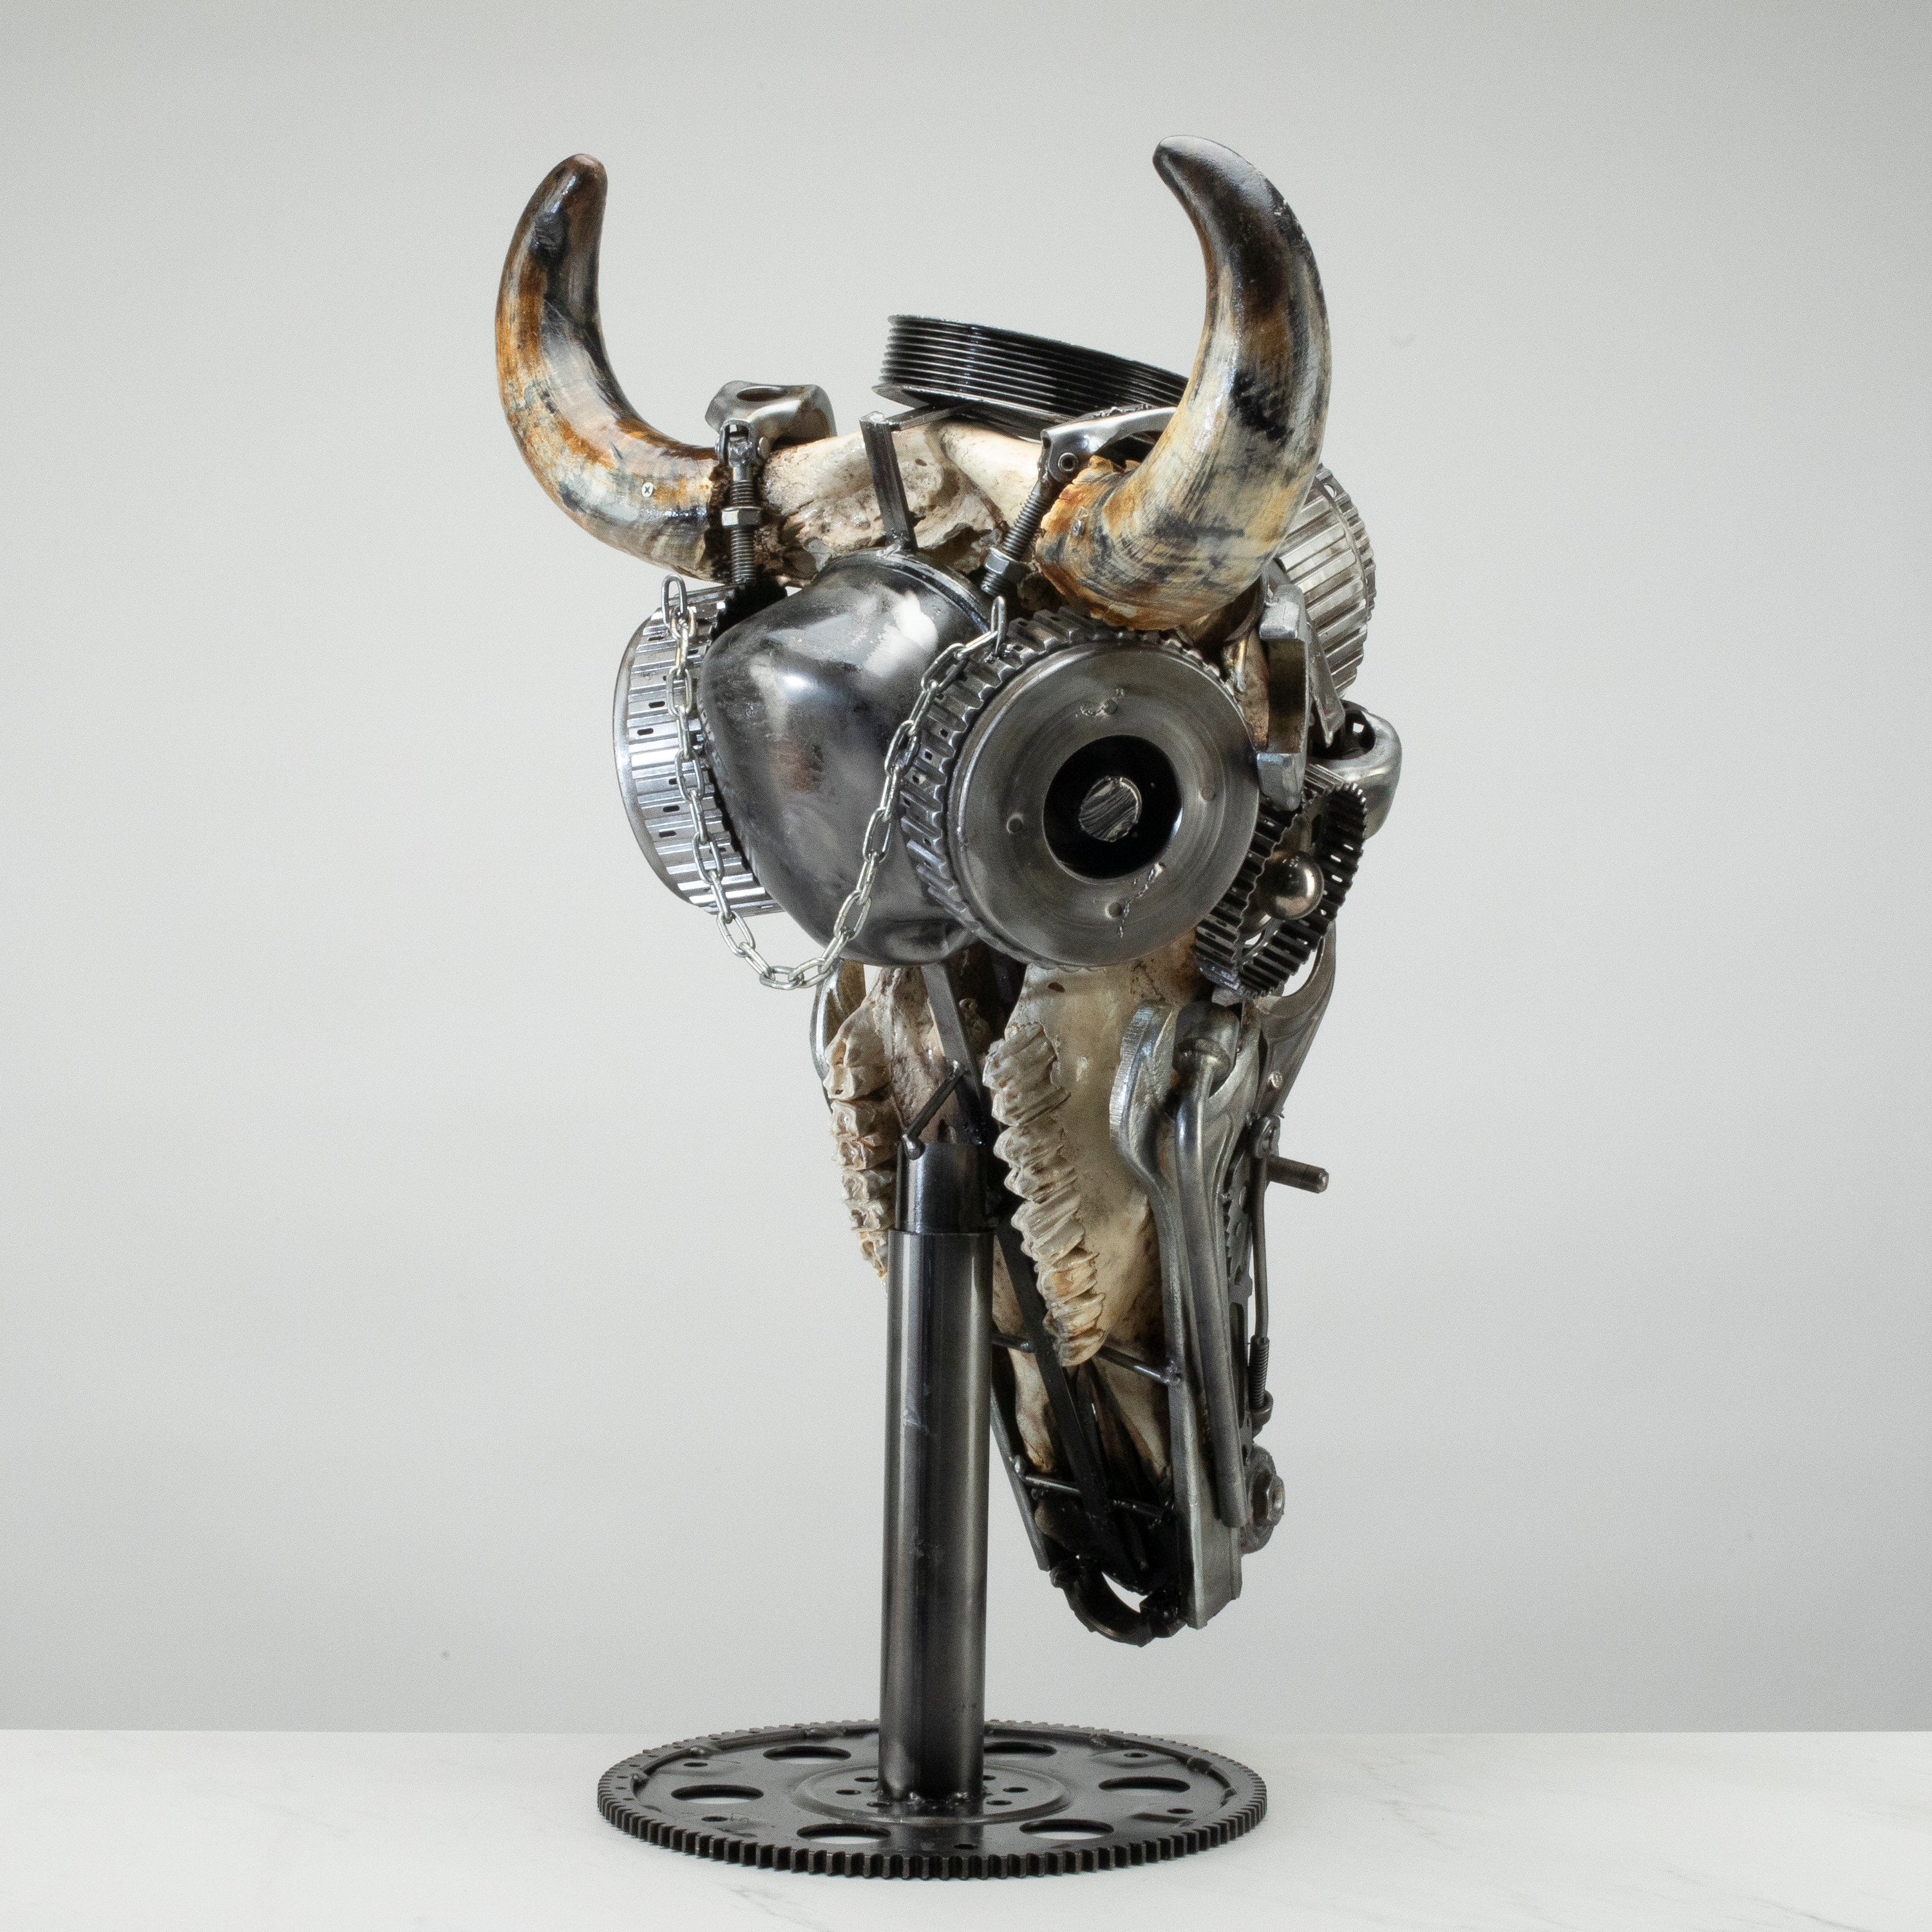 Kalifano Recycled Metal Art Bull Skull Recycled Metal Art Sculpture RMS-BSK-S141